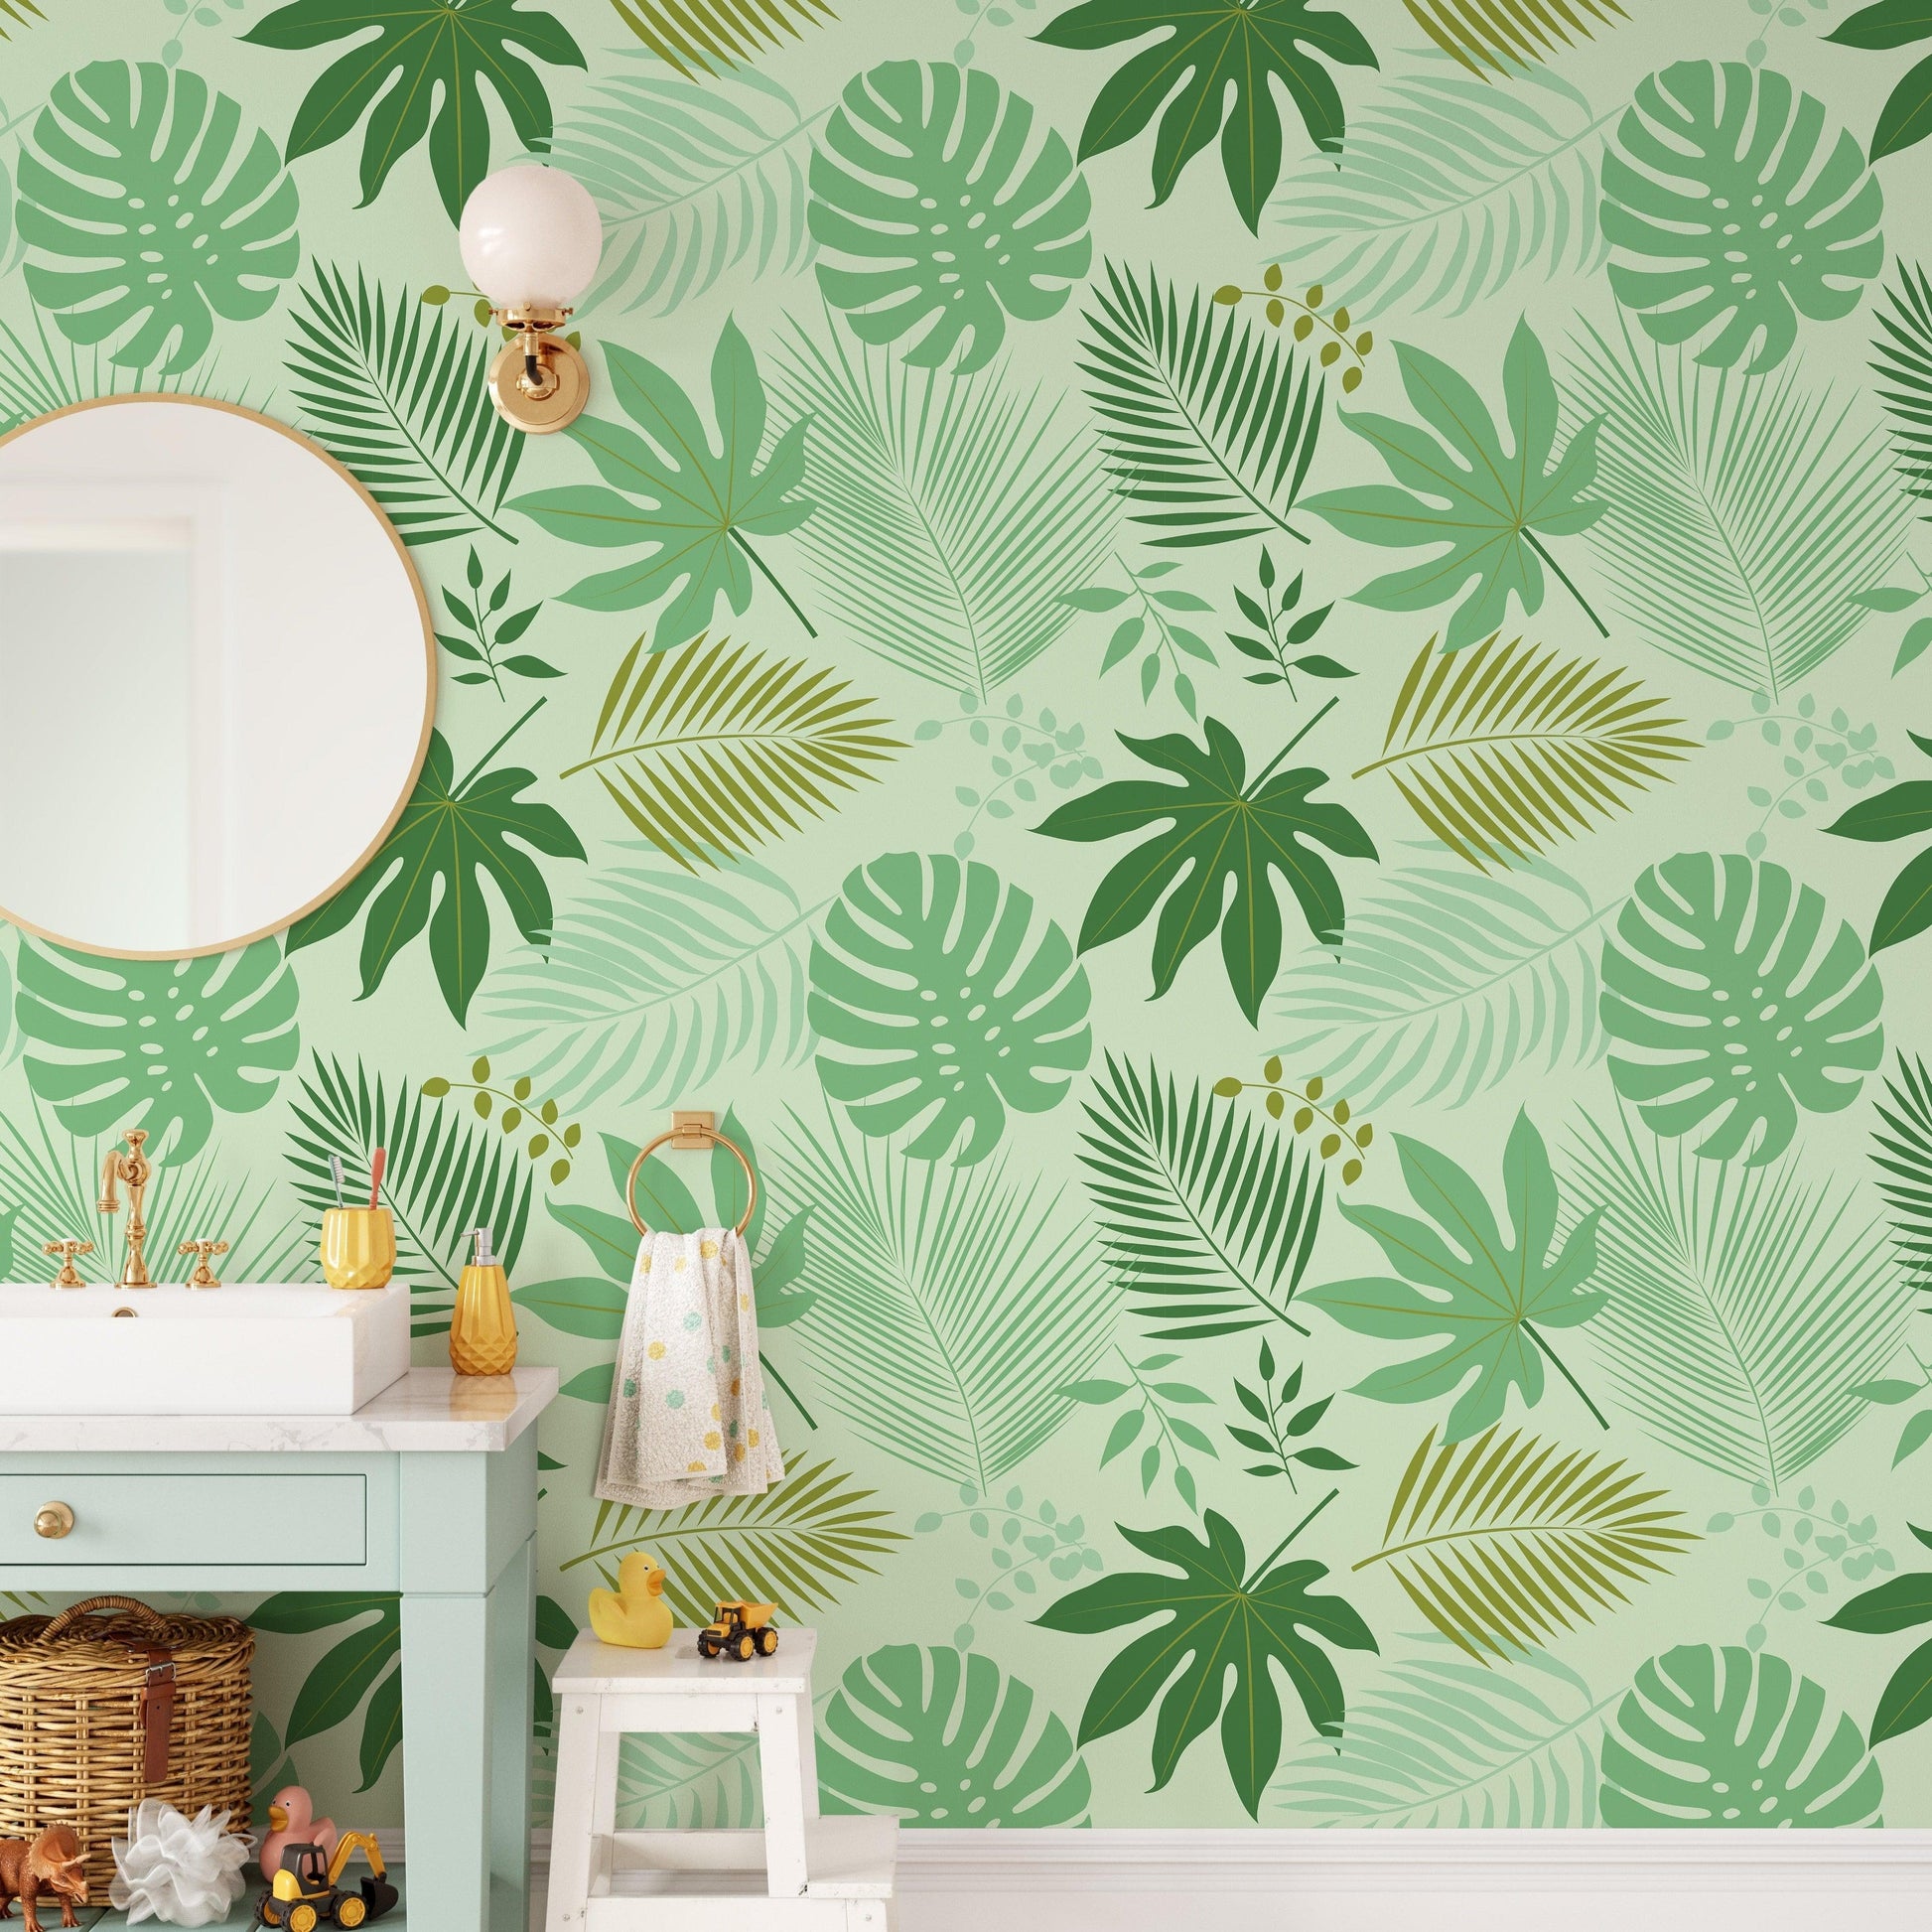 Green Tropical Palm Leaves Wallpaper Green Tropical Palm Leaves Wallpaper Green Tropical Palm Leaves Wallpaper 